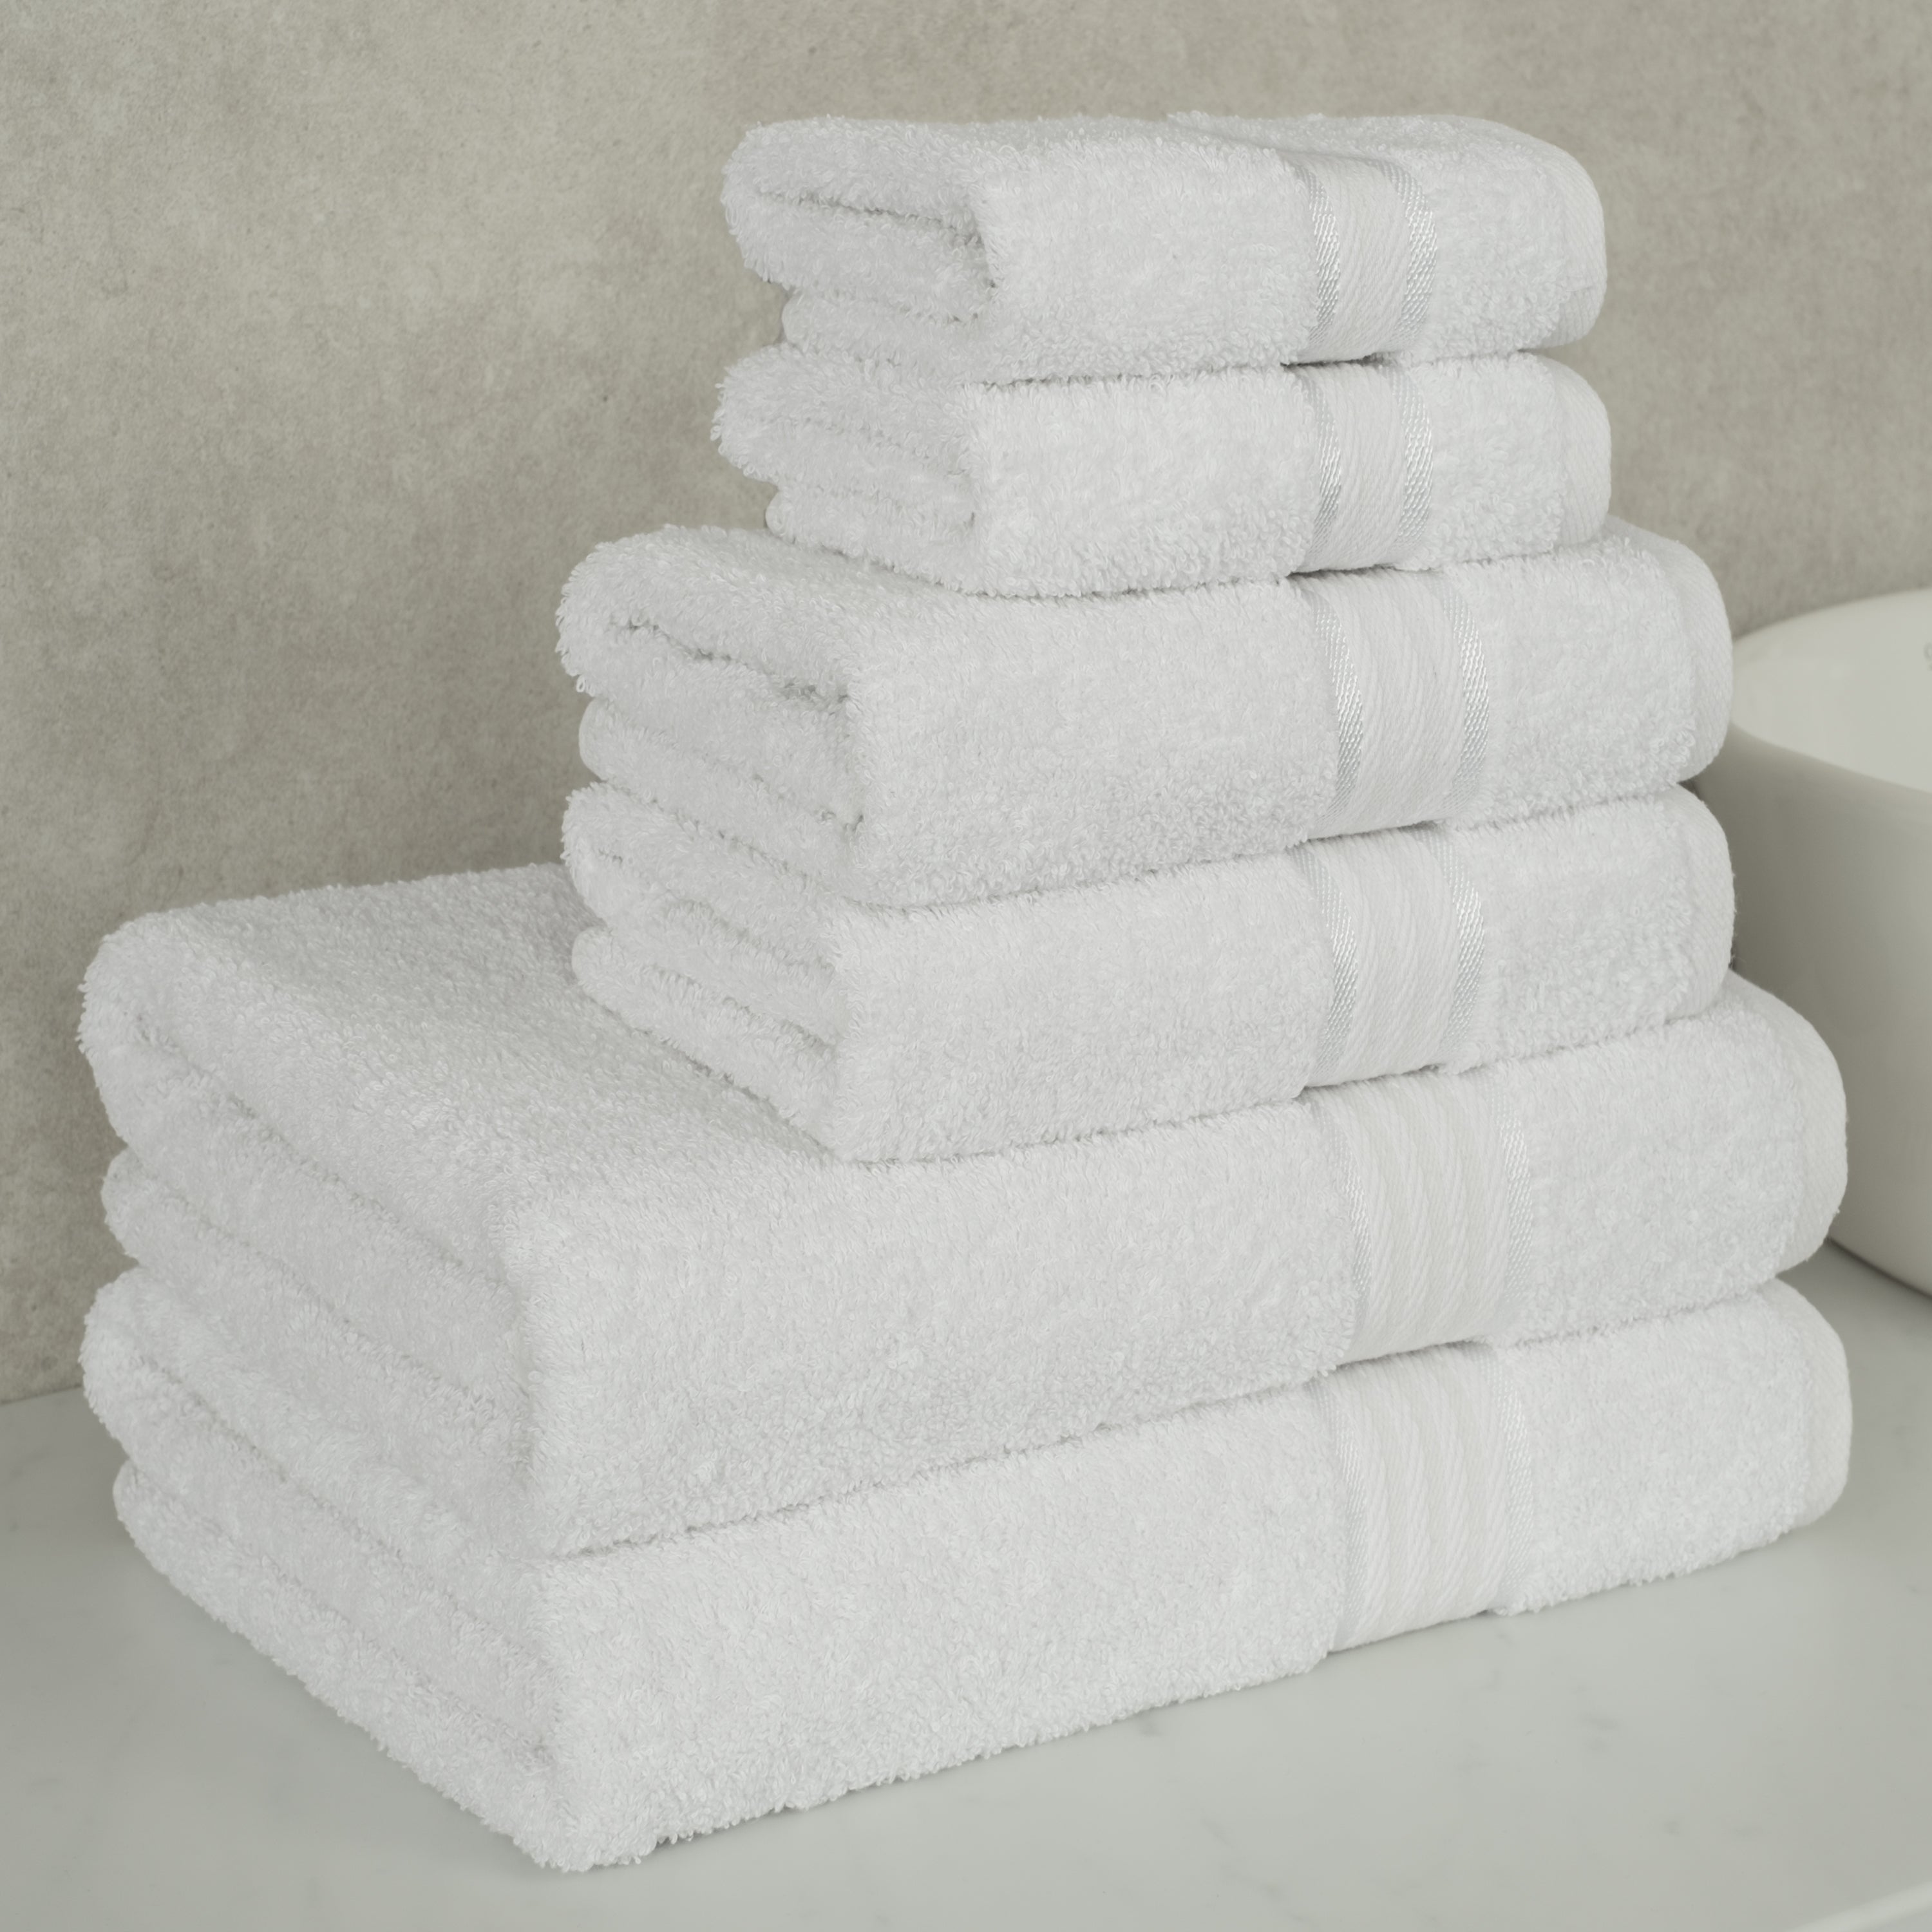 American Soft Linen - Salem 6 Piece Turkish Cotton Luxury Towel Set - White - 2